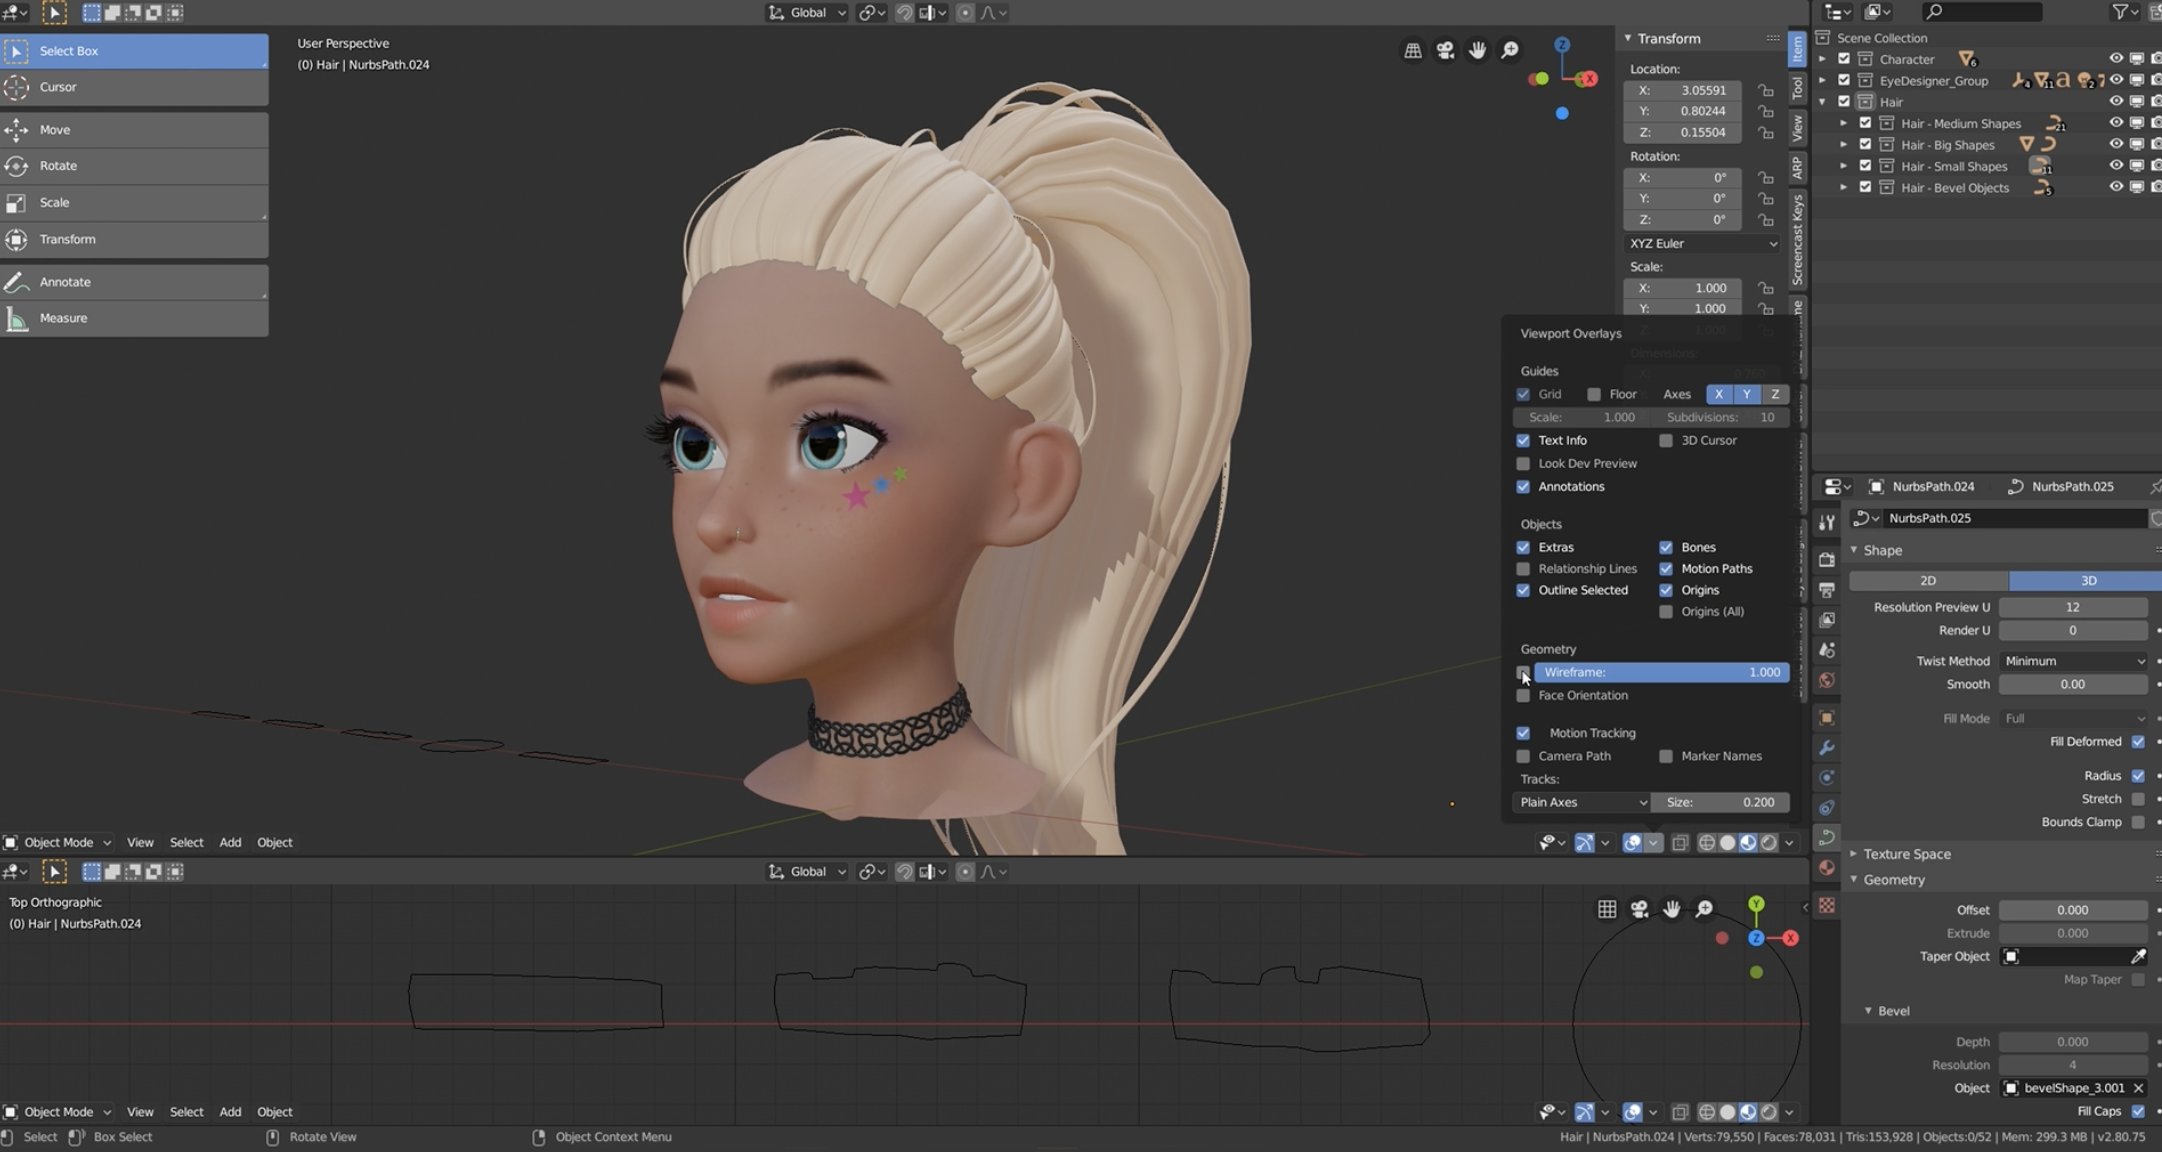 CG COOKIE Twitter: "New Blender 2.8 tutorial lands tomorrow: modeling stylized hair! https://t.co/k3b2SBrWUm" / Twitter